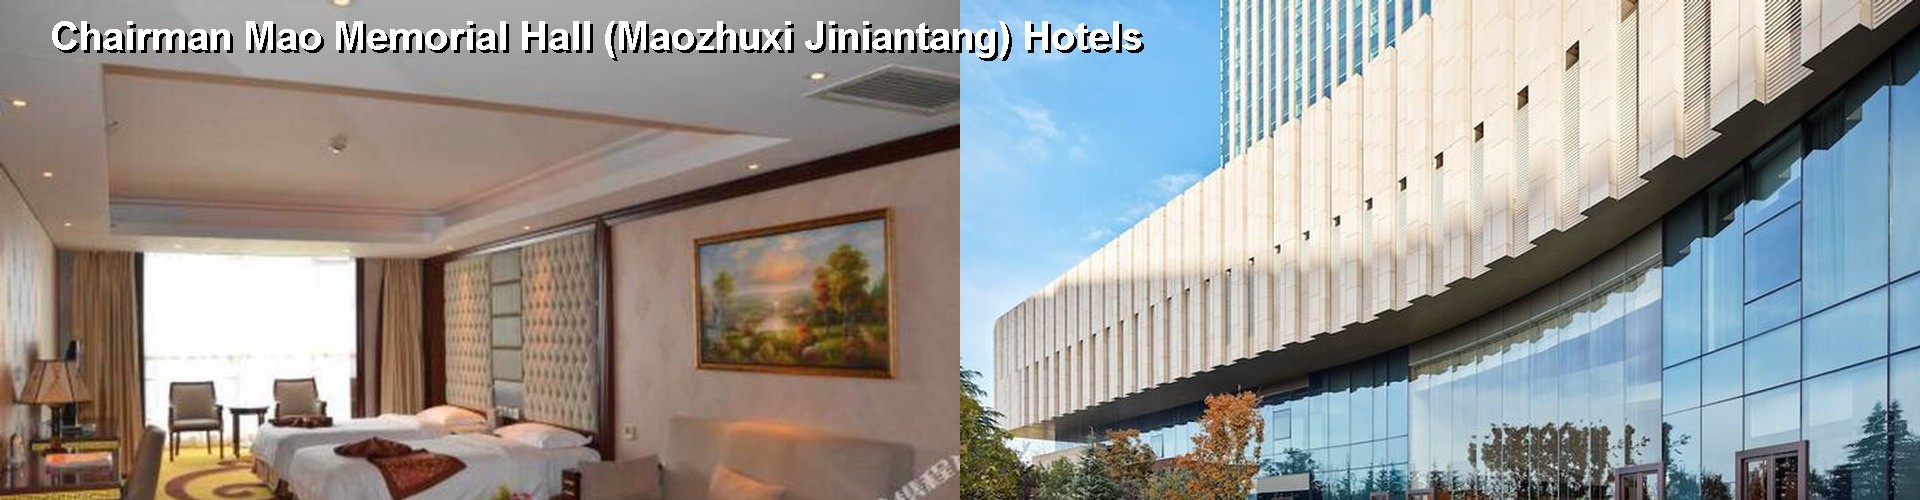 2 Best Hotels near Chairman Mao Memorial Hall (Maozhuxi Jiniantang)